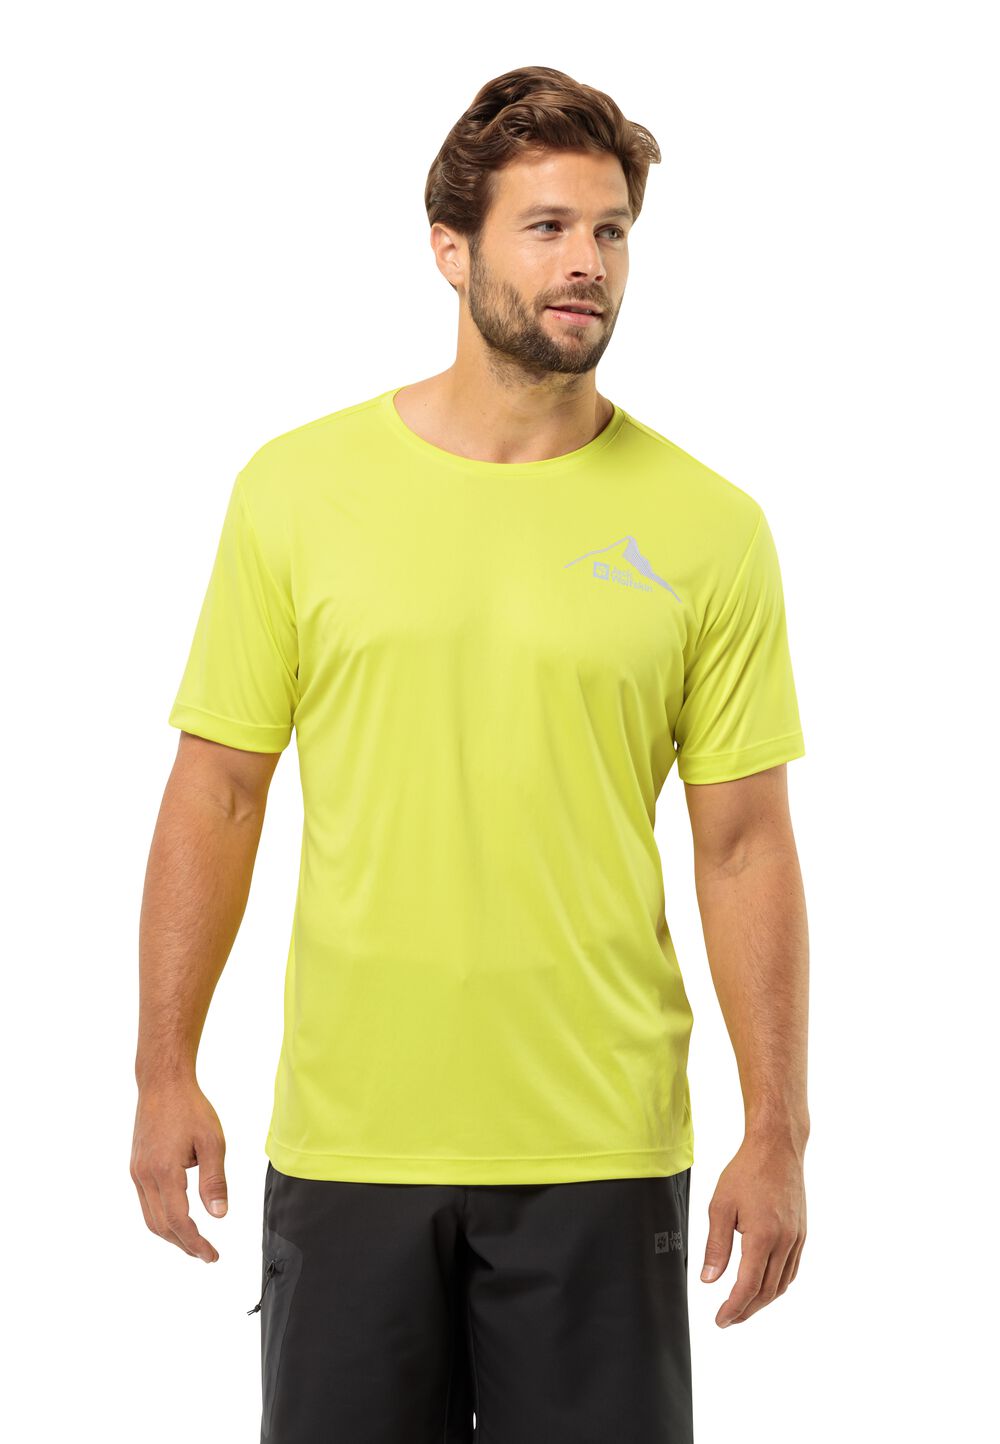 Jack Wolfskin Peak Graphic T-Shirt Men Functioneel shirt Heren XL oranje firefly